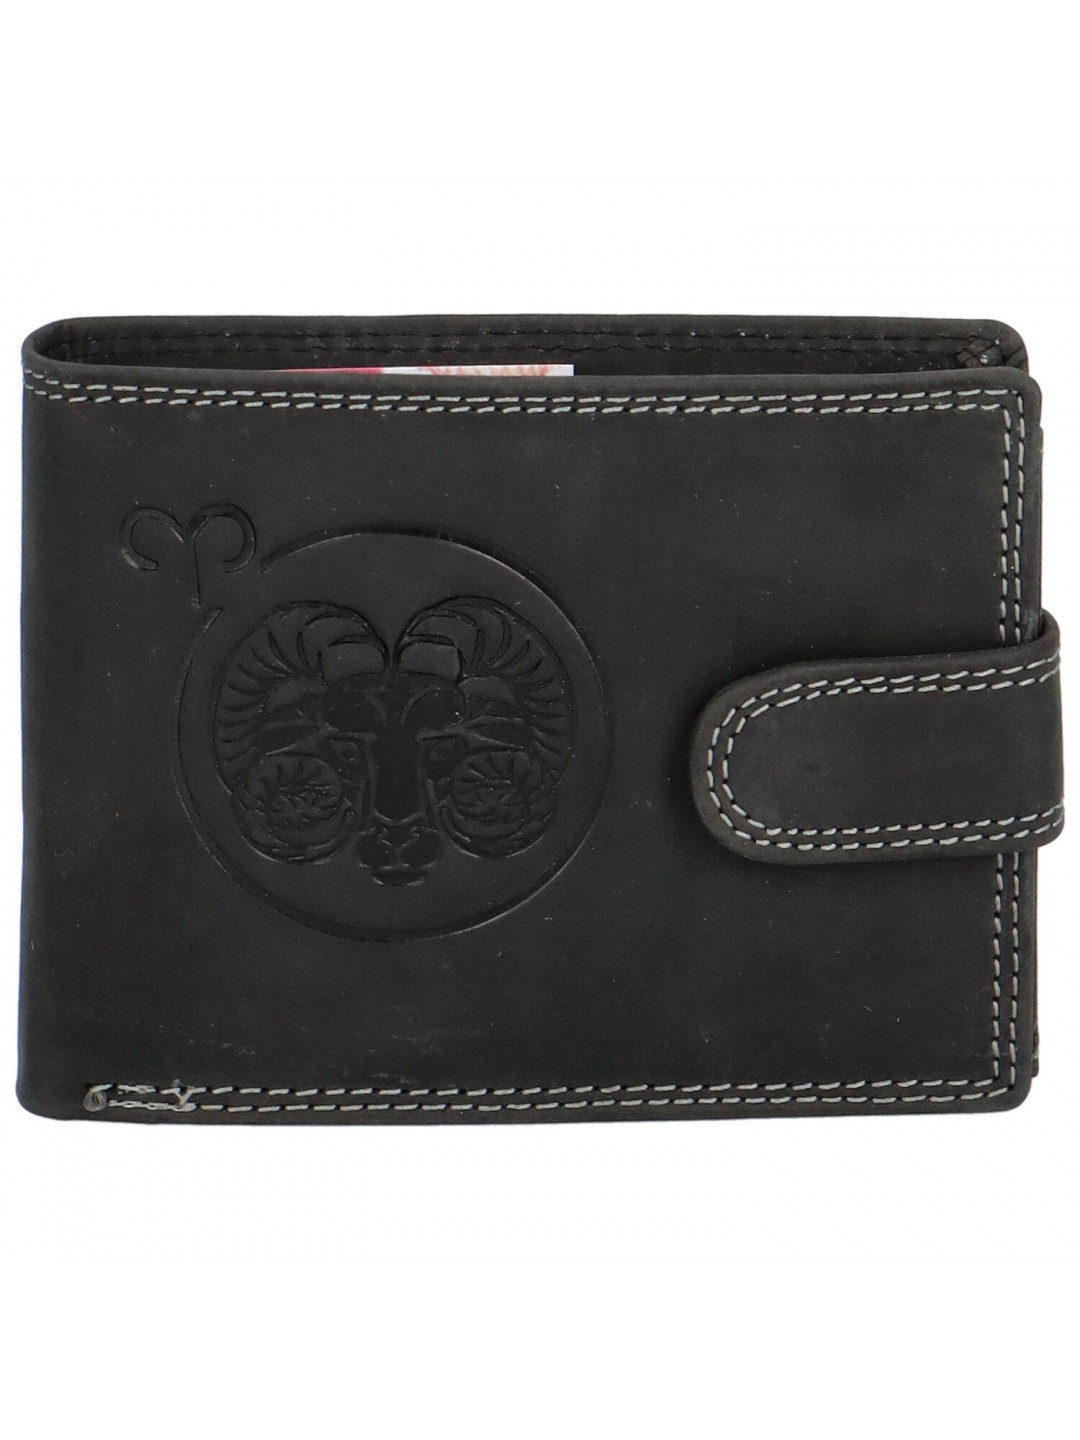 Pánská kožená peněženka černá – Delami Aroga Beran